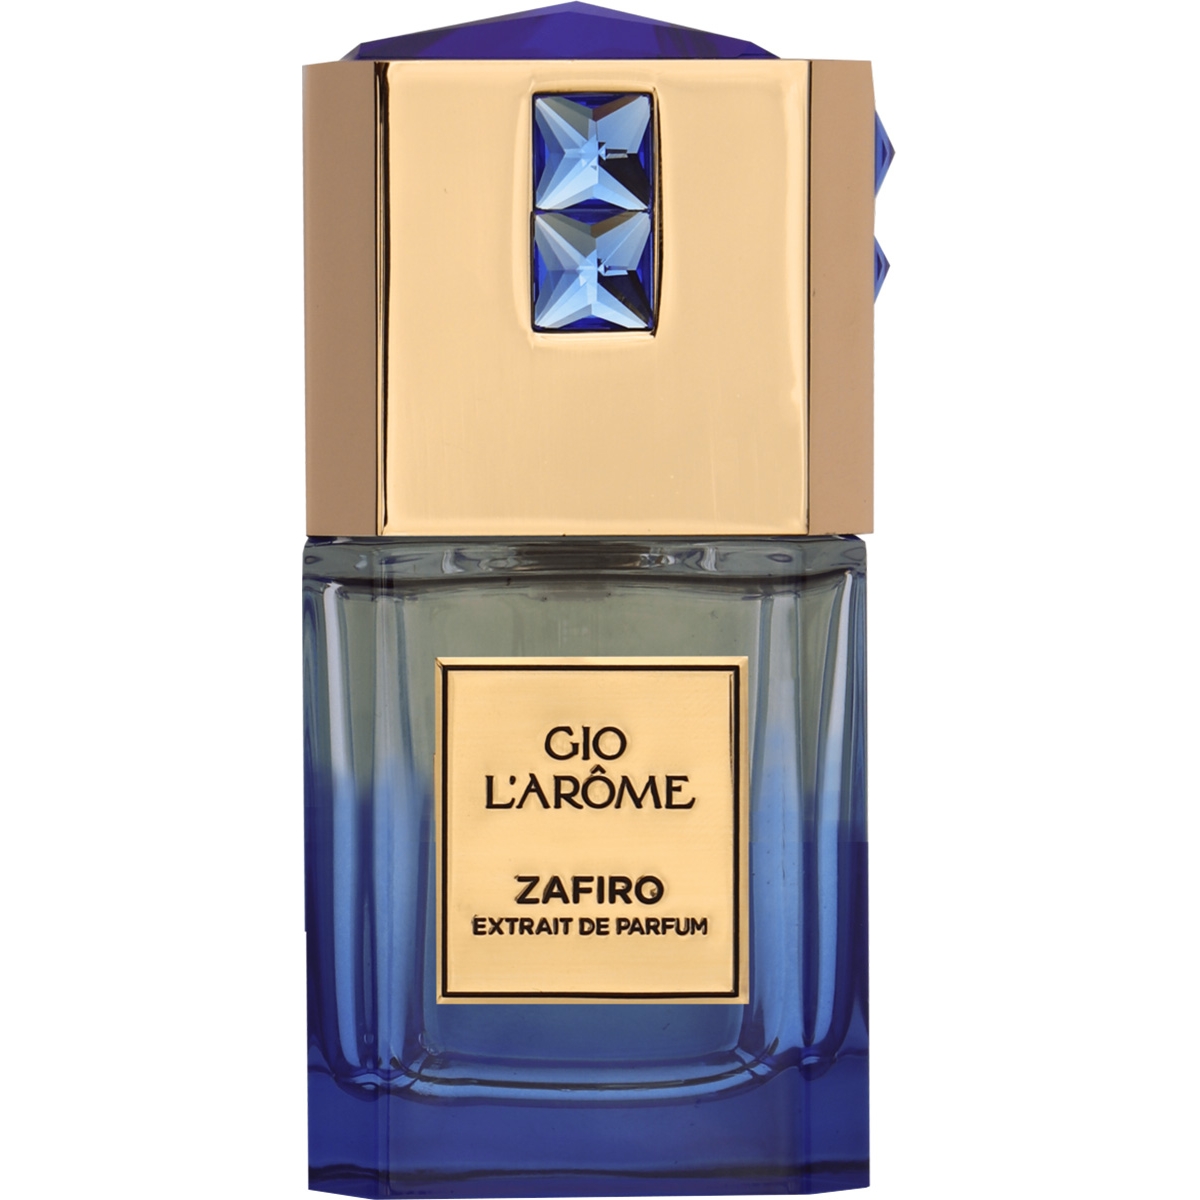 Zafiro Gio L'Arome Perfumes, Unisex Perfumes, Arada Perfumes